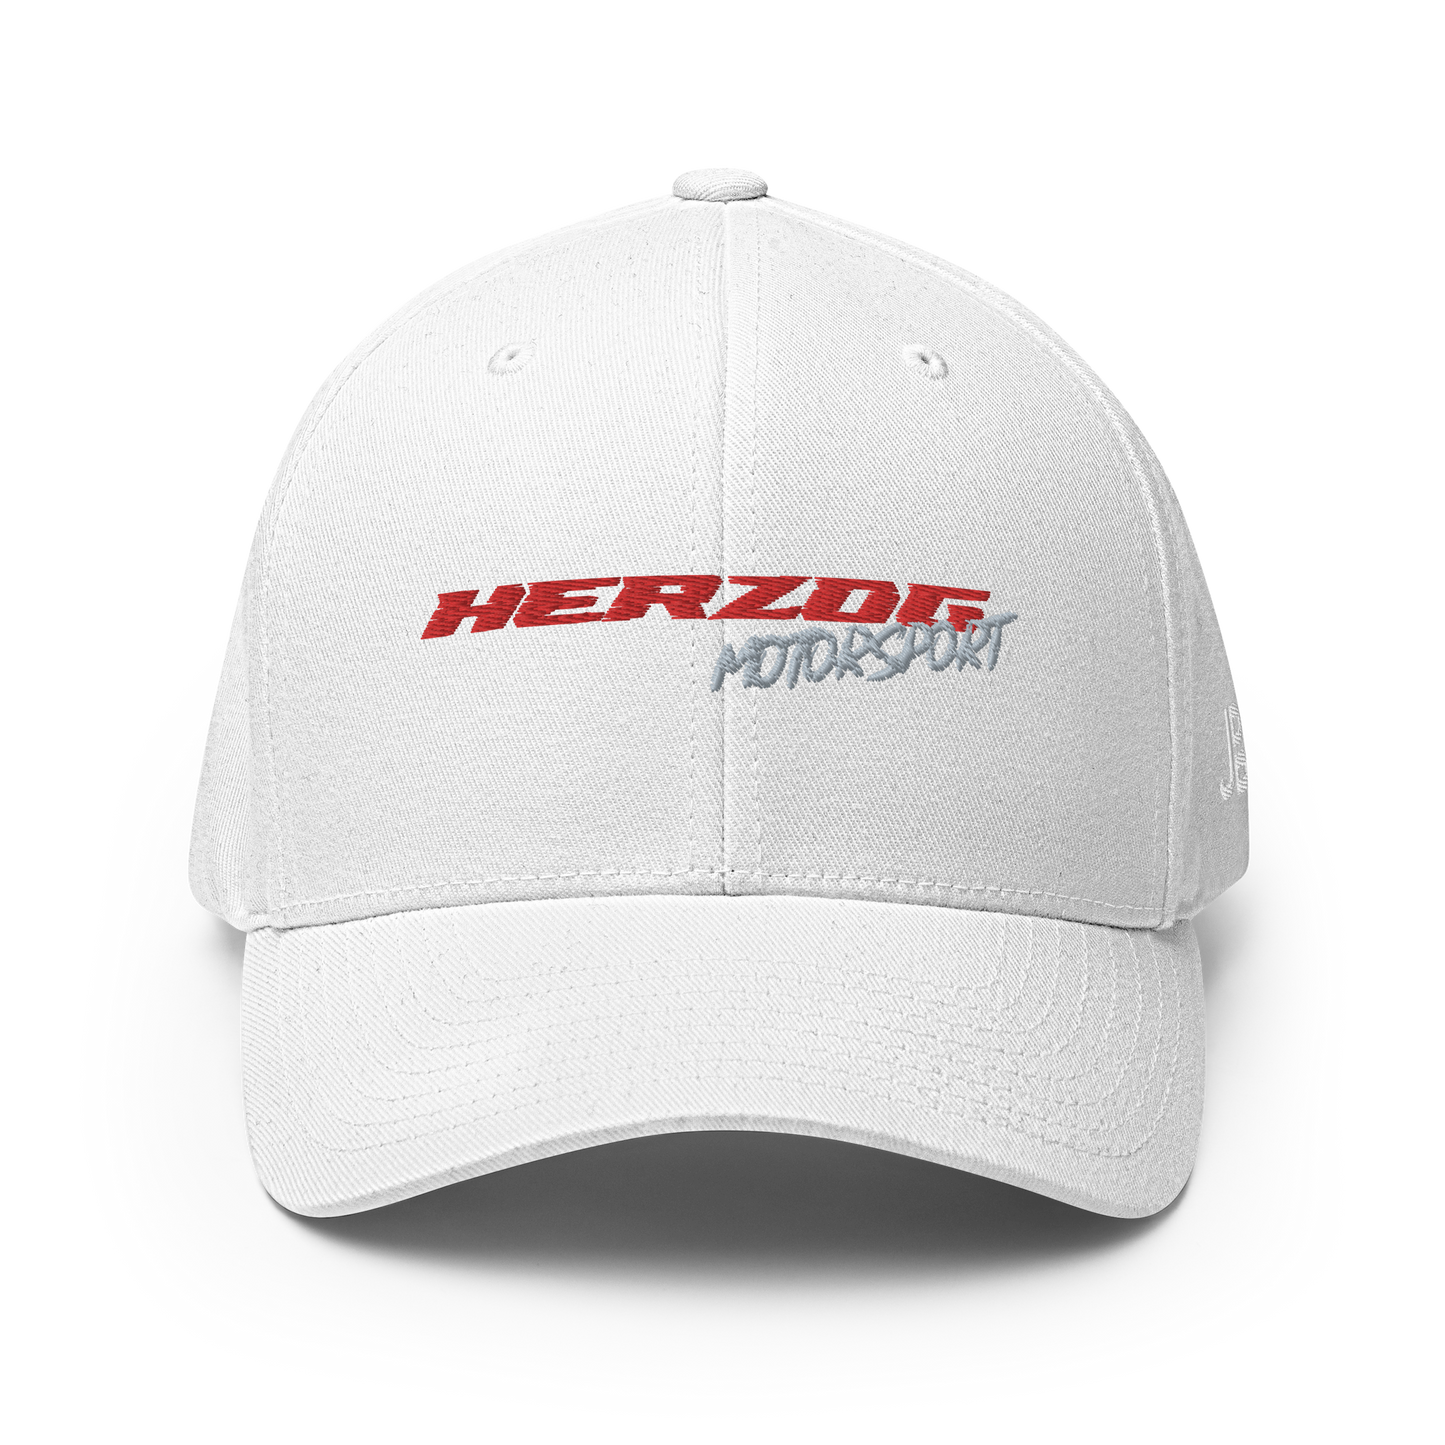 HERZOG MOTORSPORT - Flexfit Cap